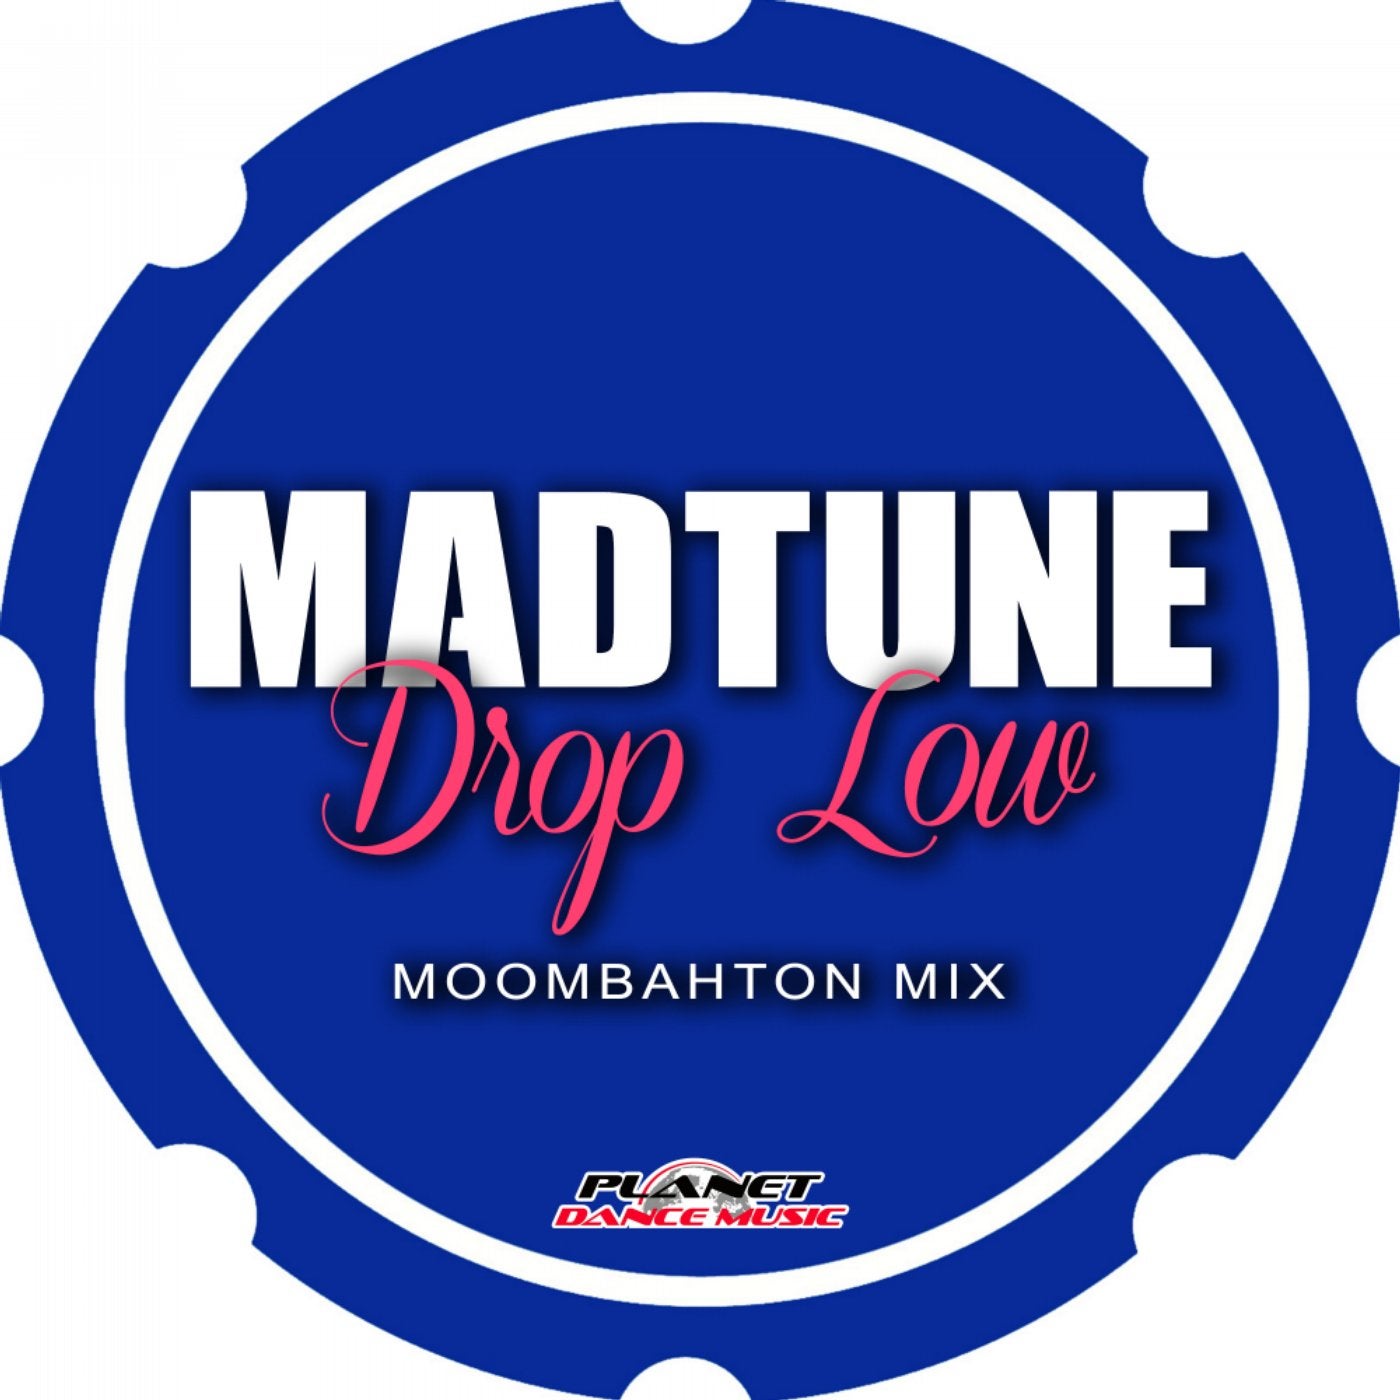 Drop Low (Moombahton Mix)